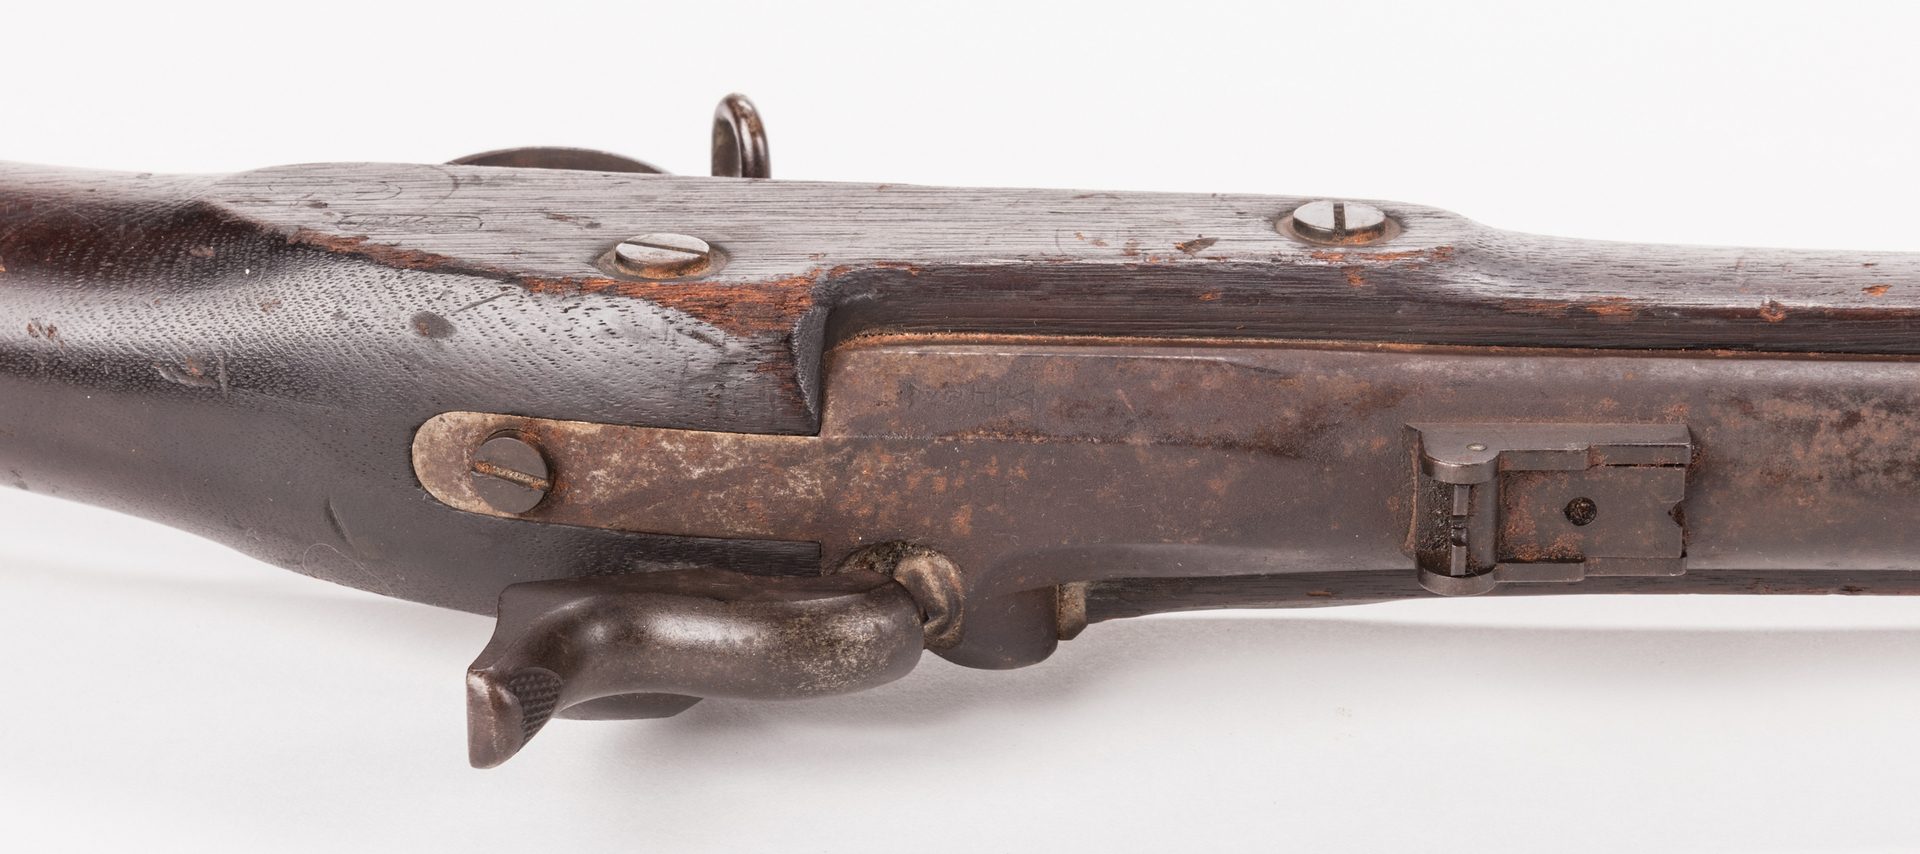 Lot 217: 2 Civil War Rifles, Springfield & Perry